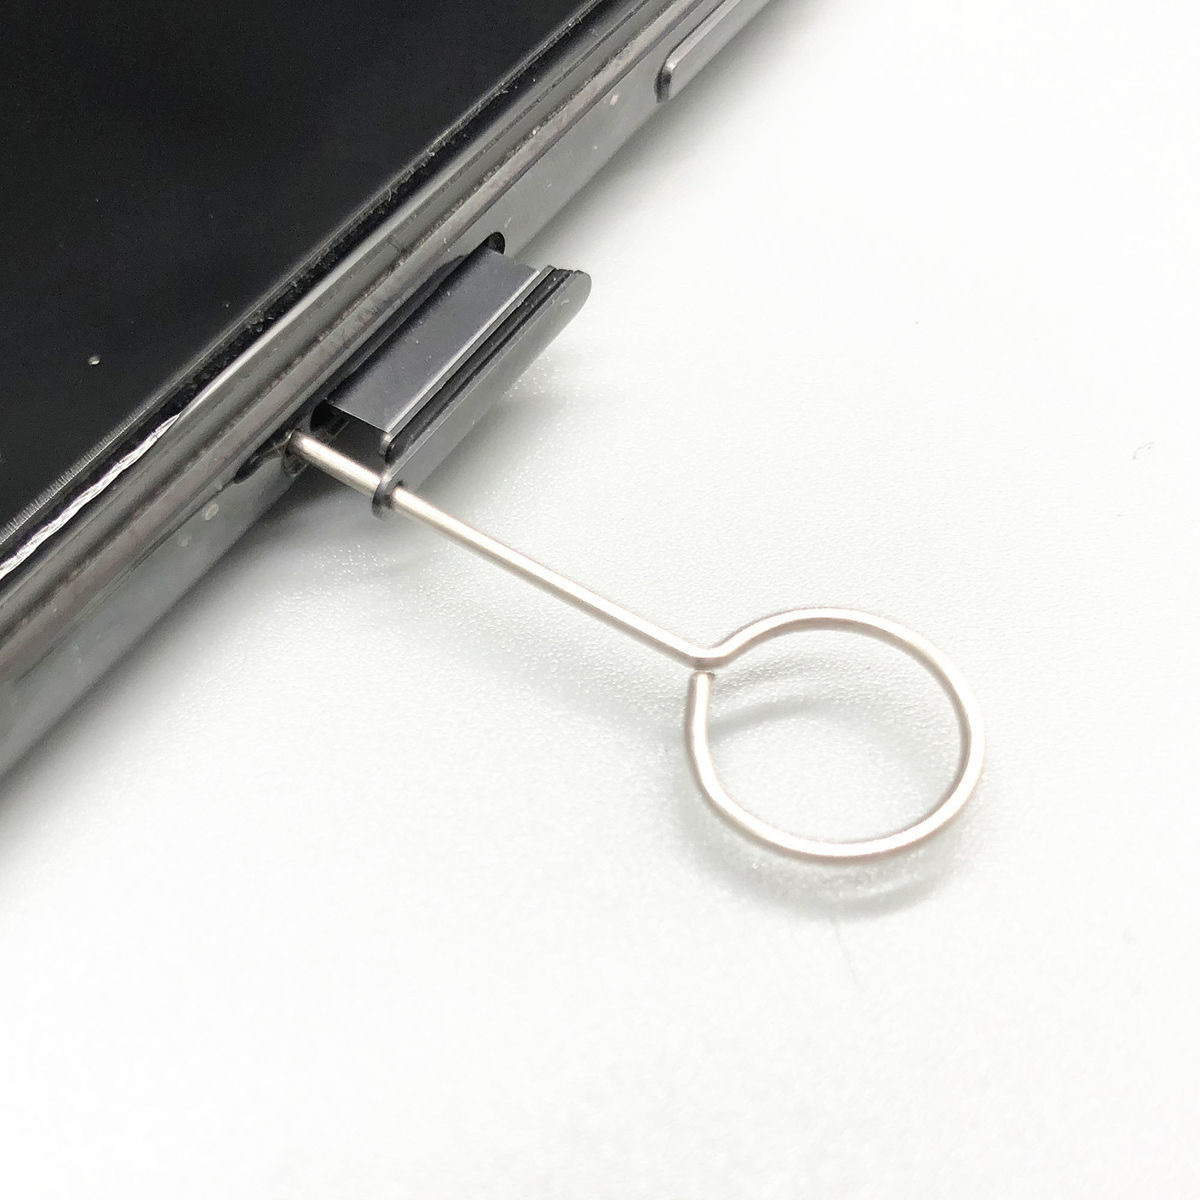 Manufactor supply mobile phone Take card pin SIM Take card pin For Mac Huawei Android Mobile